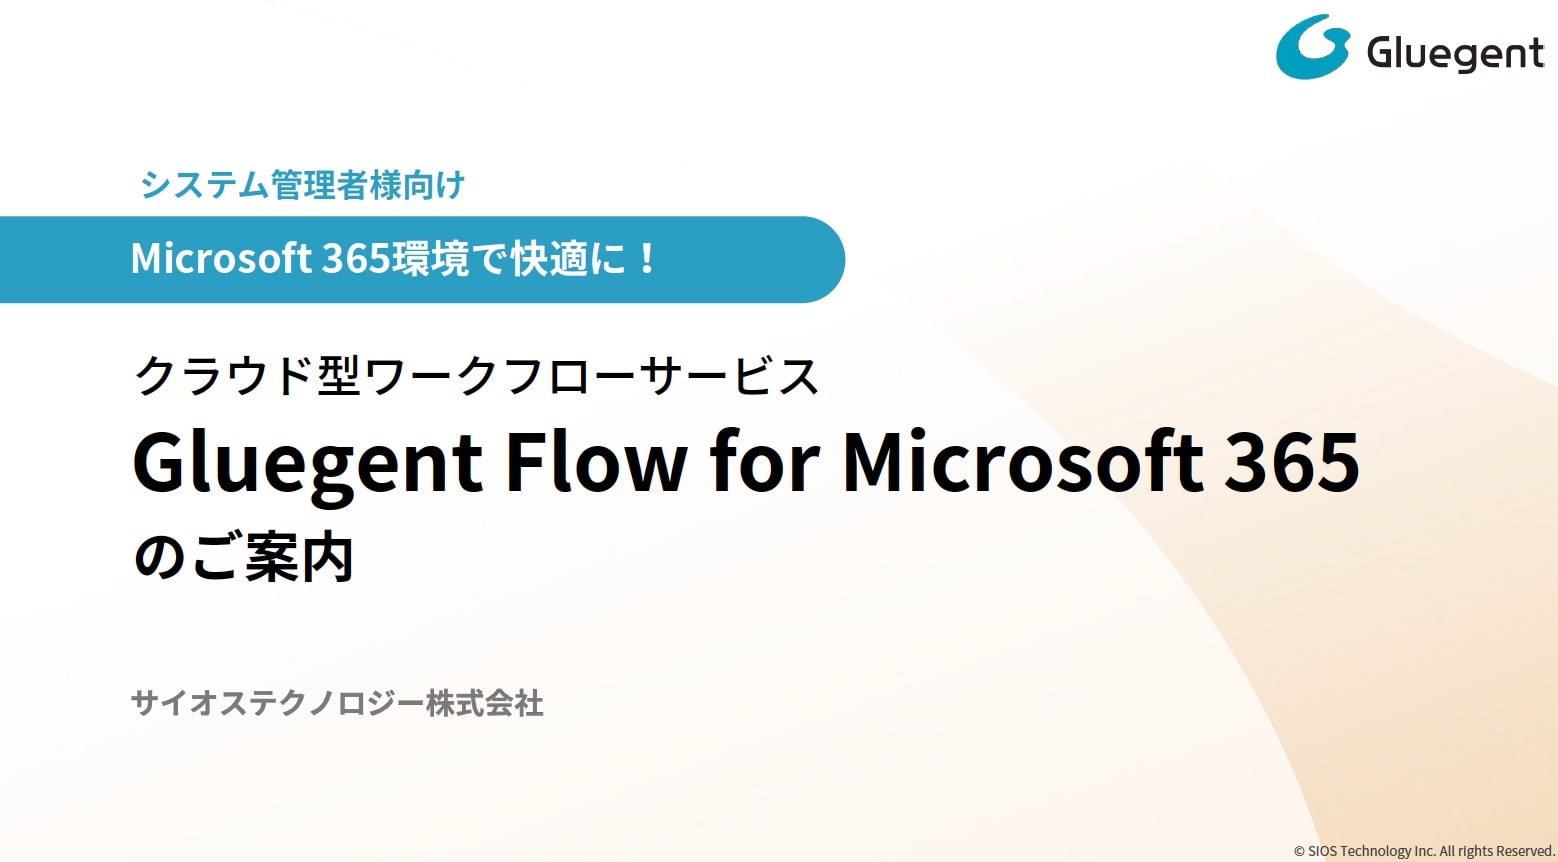 Gluegent Flow for Microsoft 365